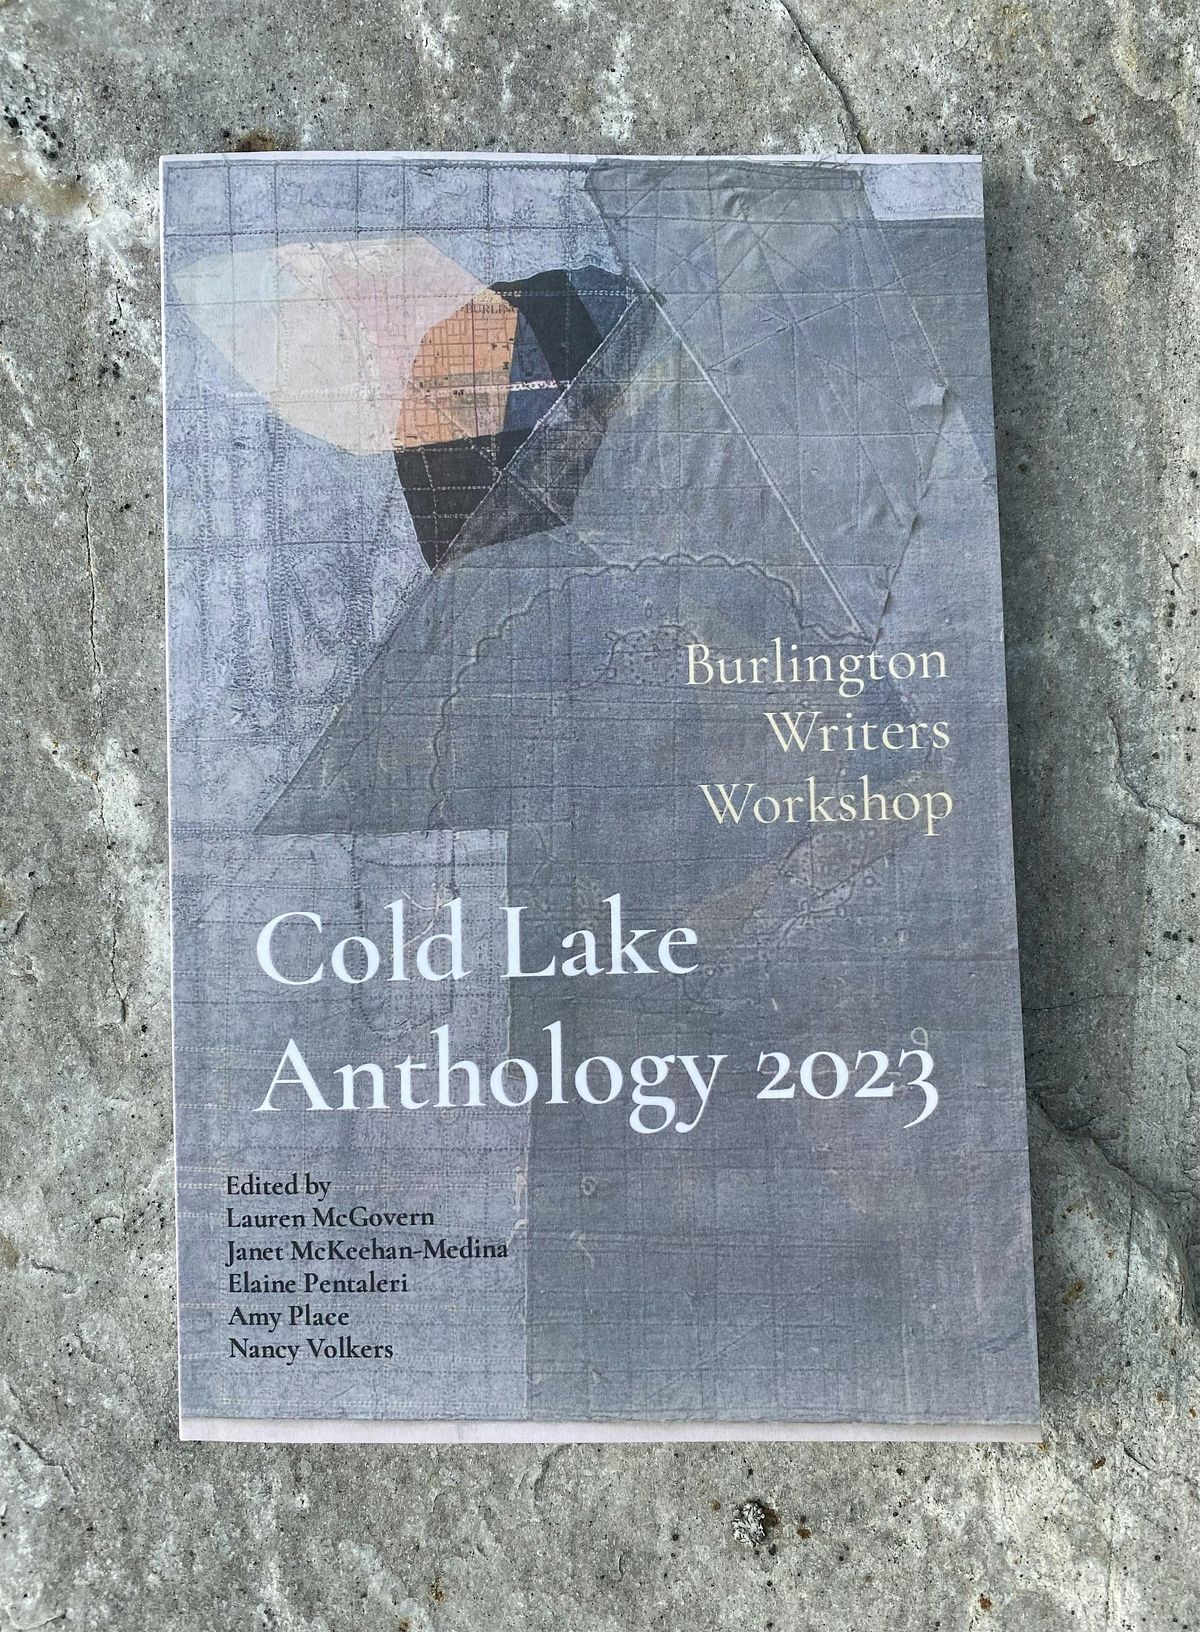 Hybrid Cold Lake Anthology - BOOK LAUNCH